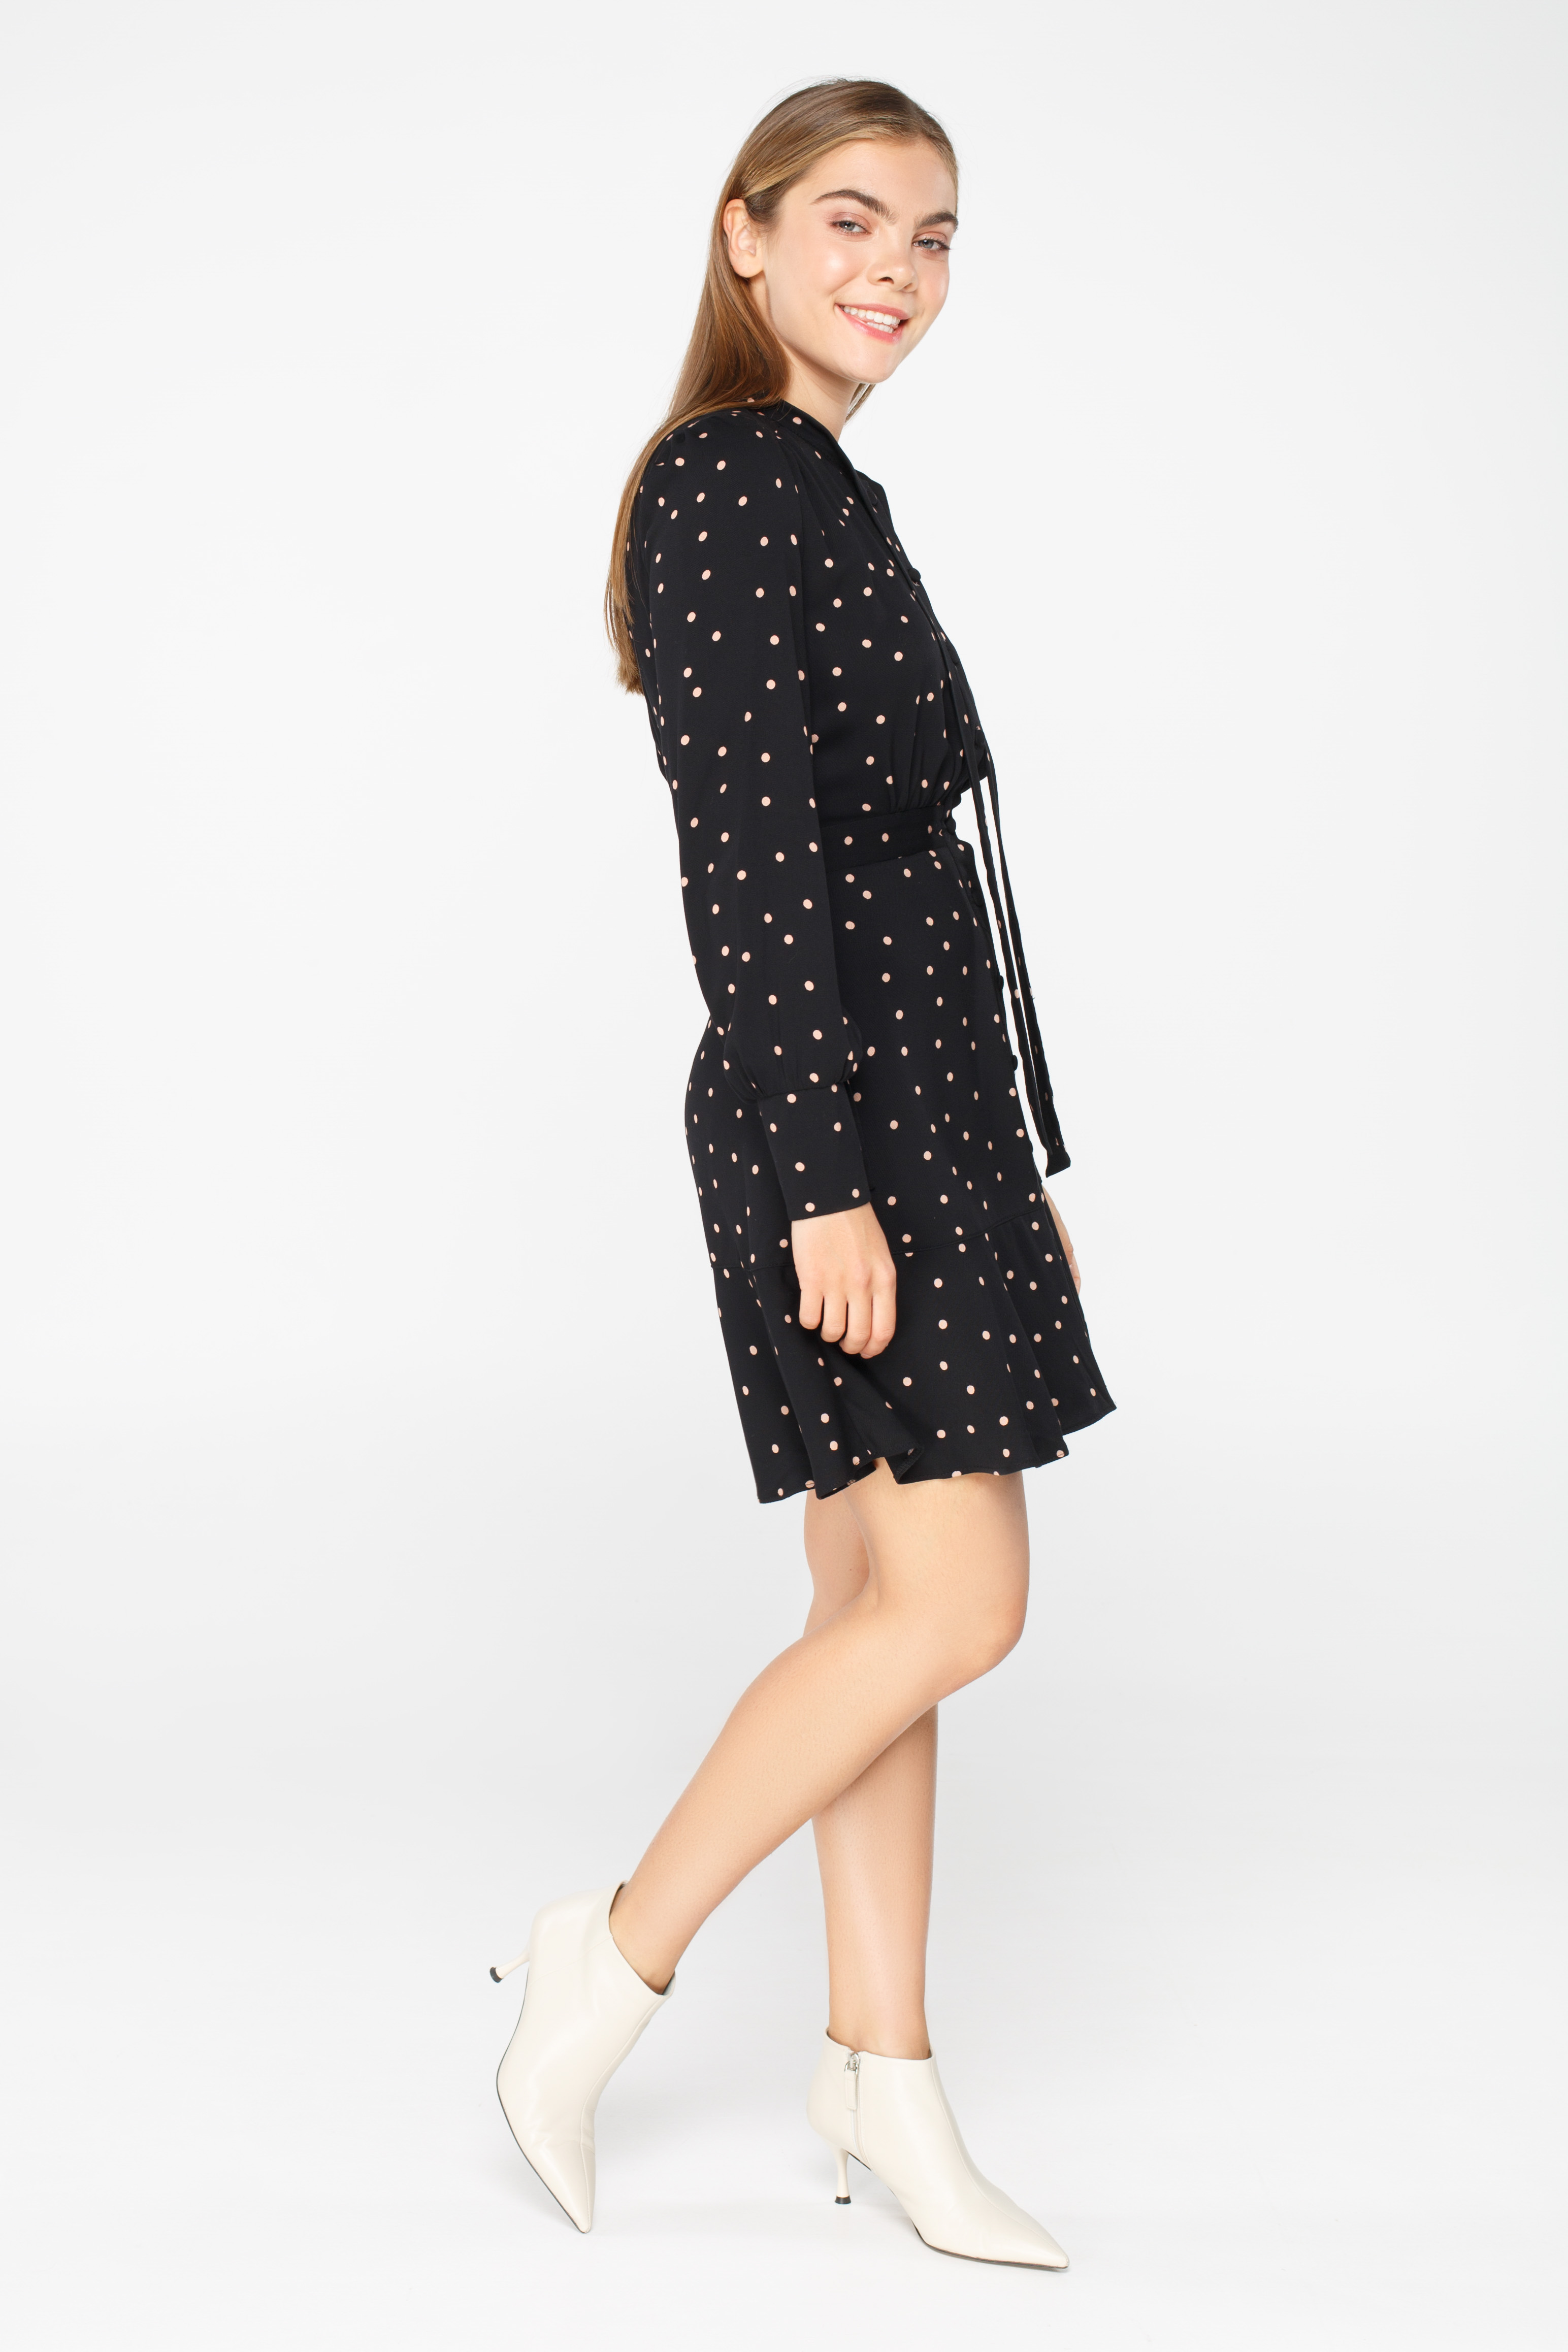 Black polka dot dress above the knee, photo 4